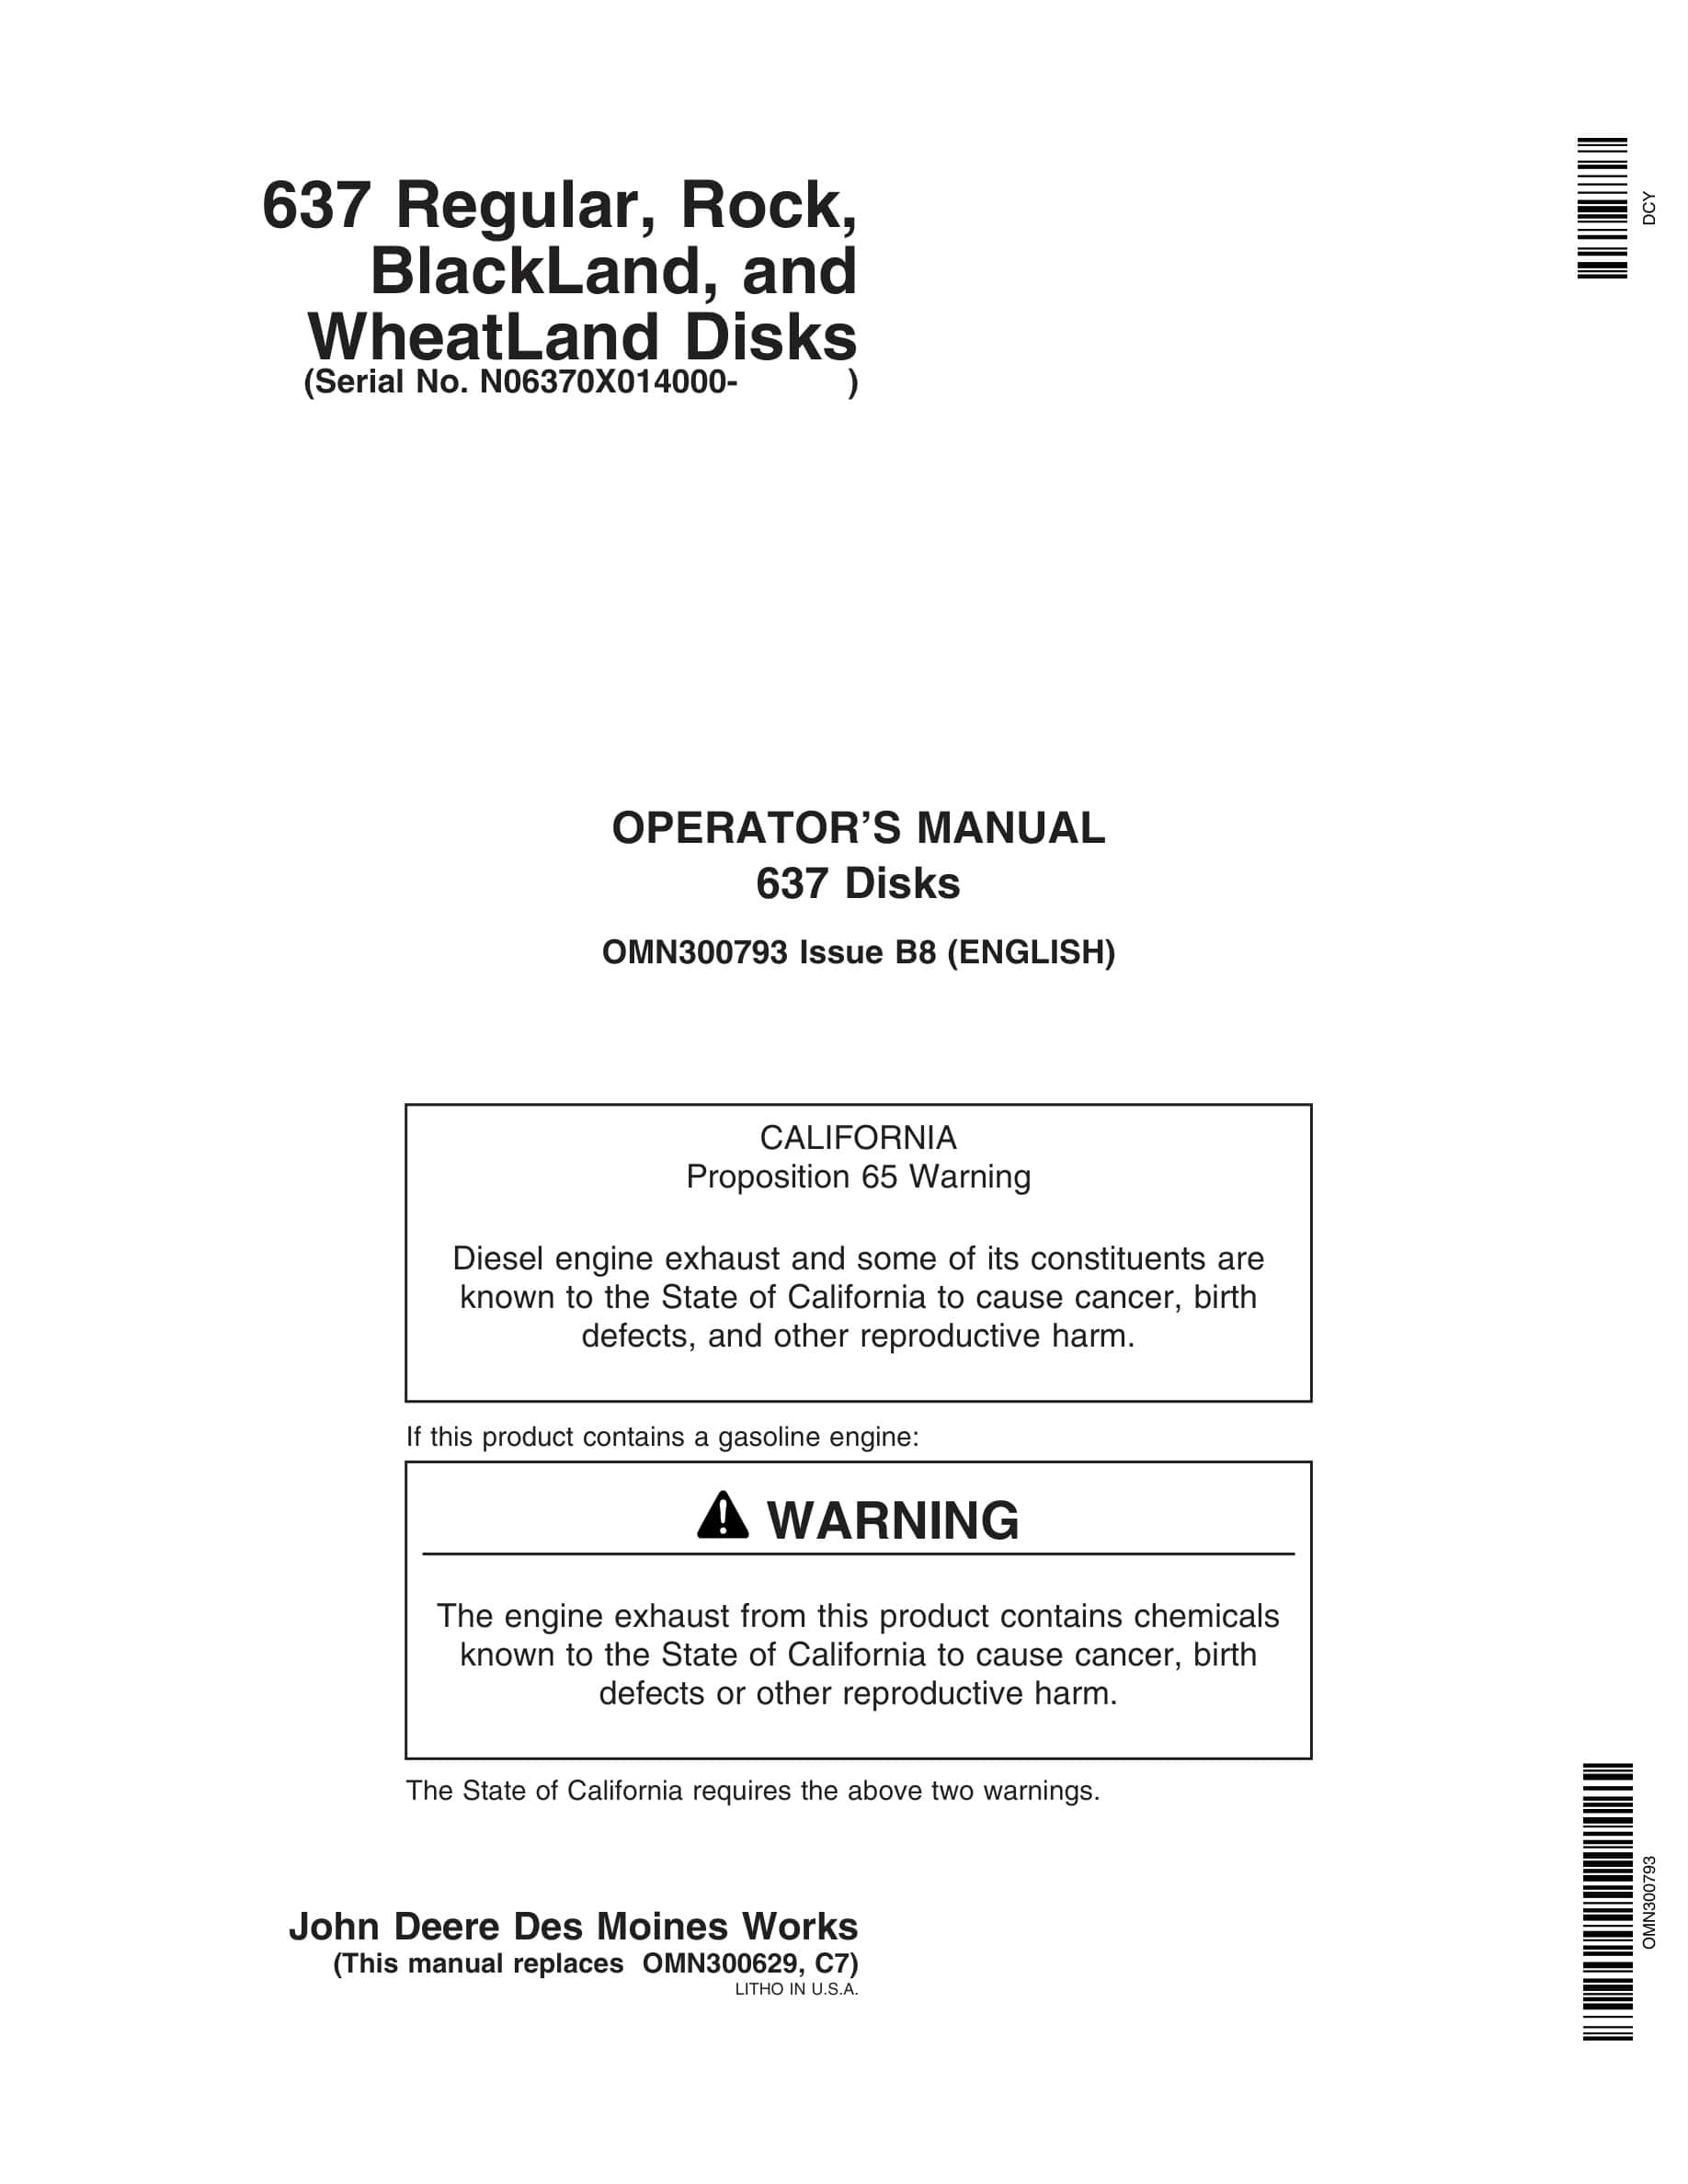 John Deere 637 Regular, Rock, BlackLand, and WheatLand Disks Operator Manual OMN300793-1